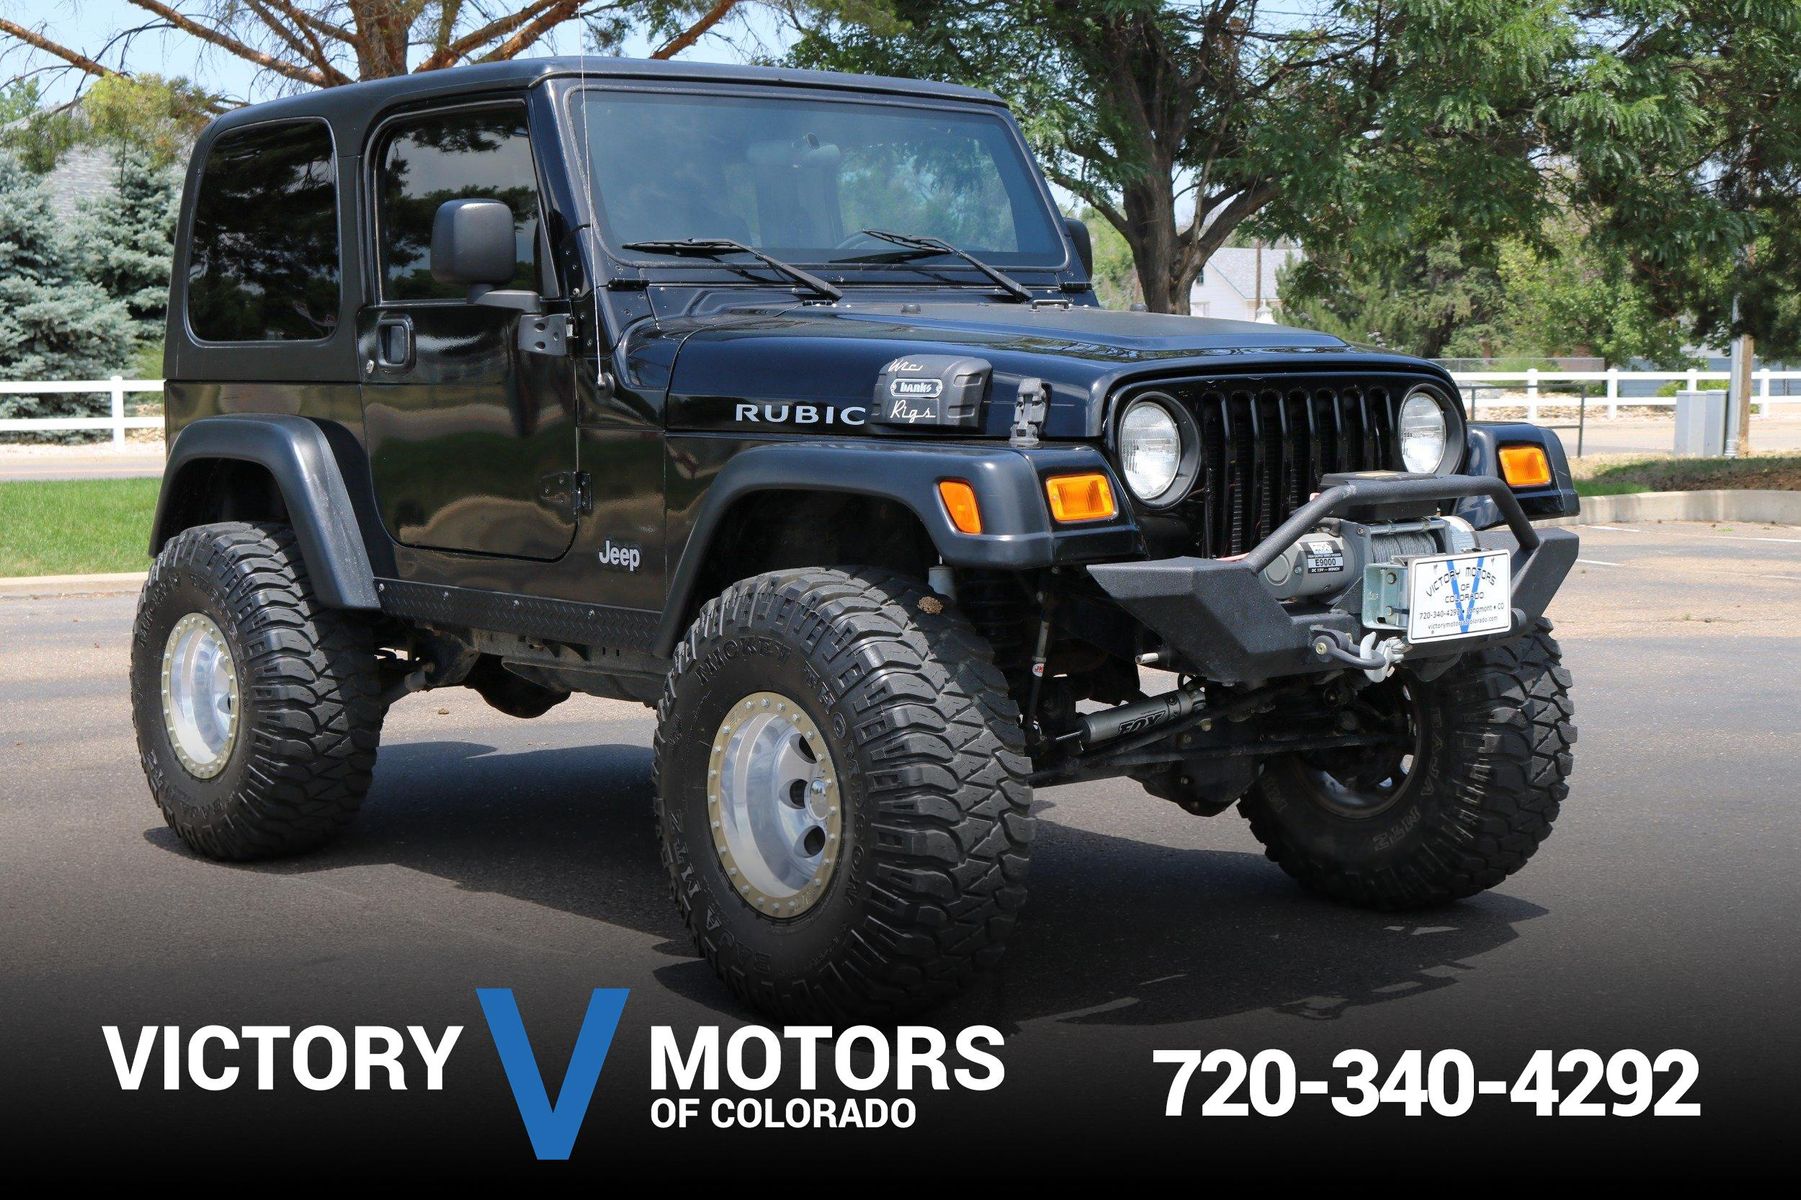 2006 Jeep Wrangler Rubicon Turbo | Victory Motors of Colorado